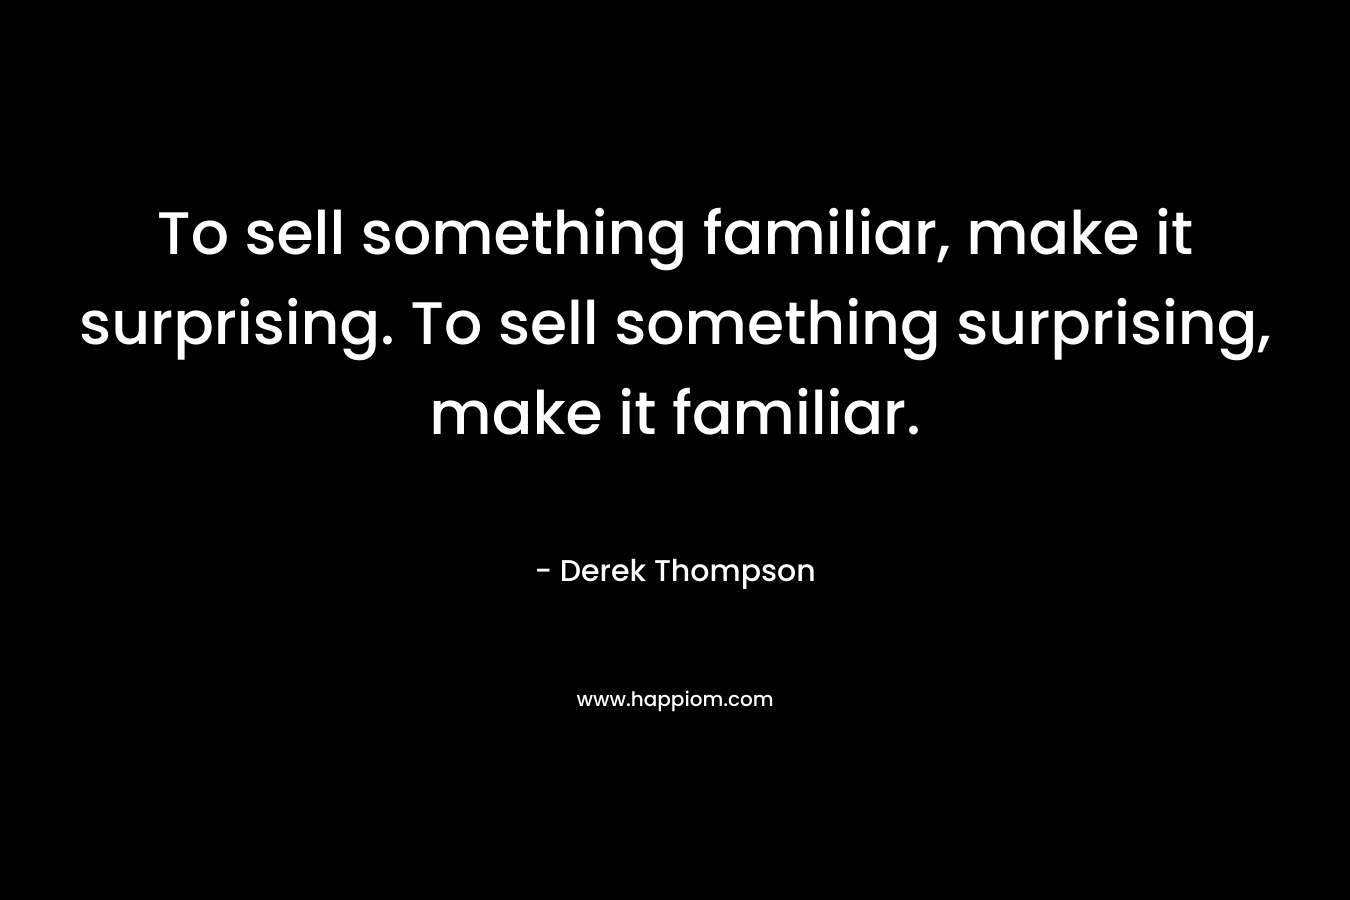 To sell something familiar, make it surprising. To sell something surprising, make it familiar.